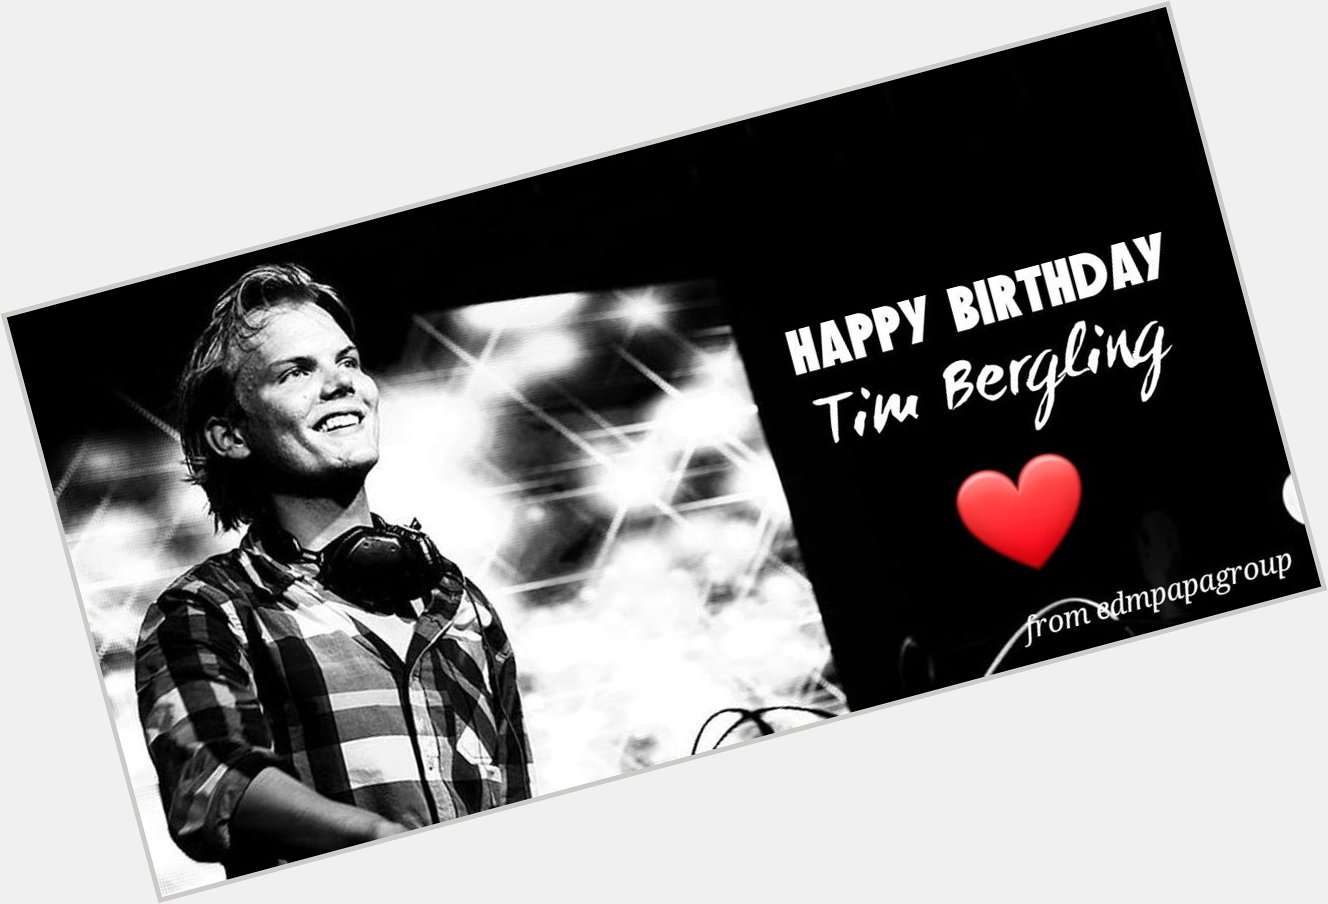 Happy Birthday Tim Bergling aka .. We will always miss you 